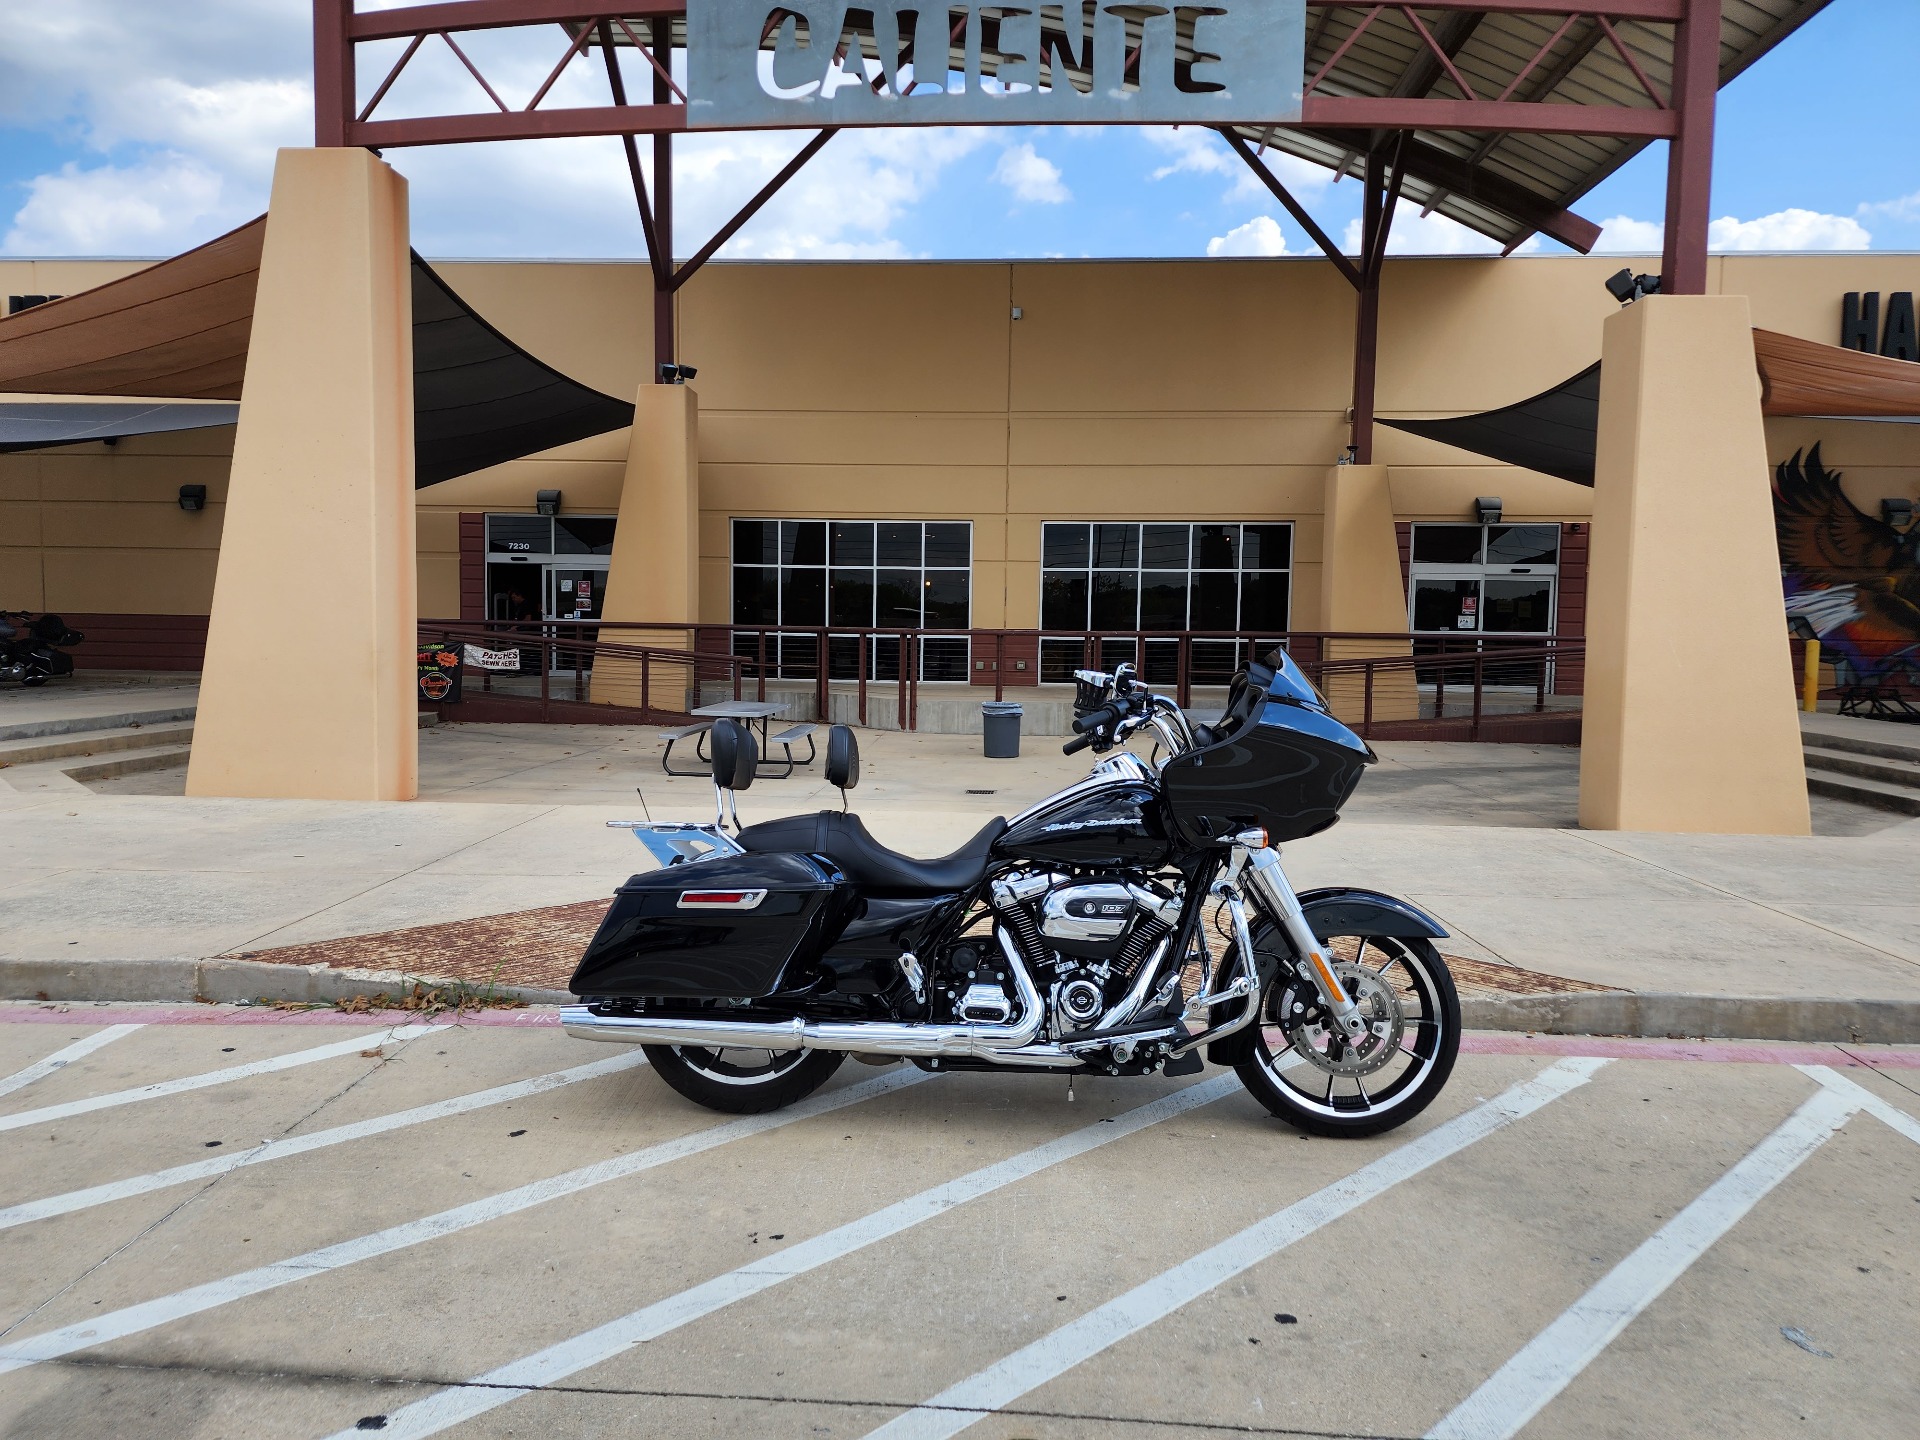 2020 Harley-Davidson Road Glide® in San Antonio, Texas - Photo 1